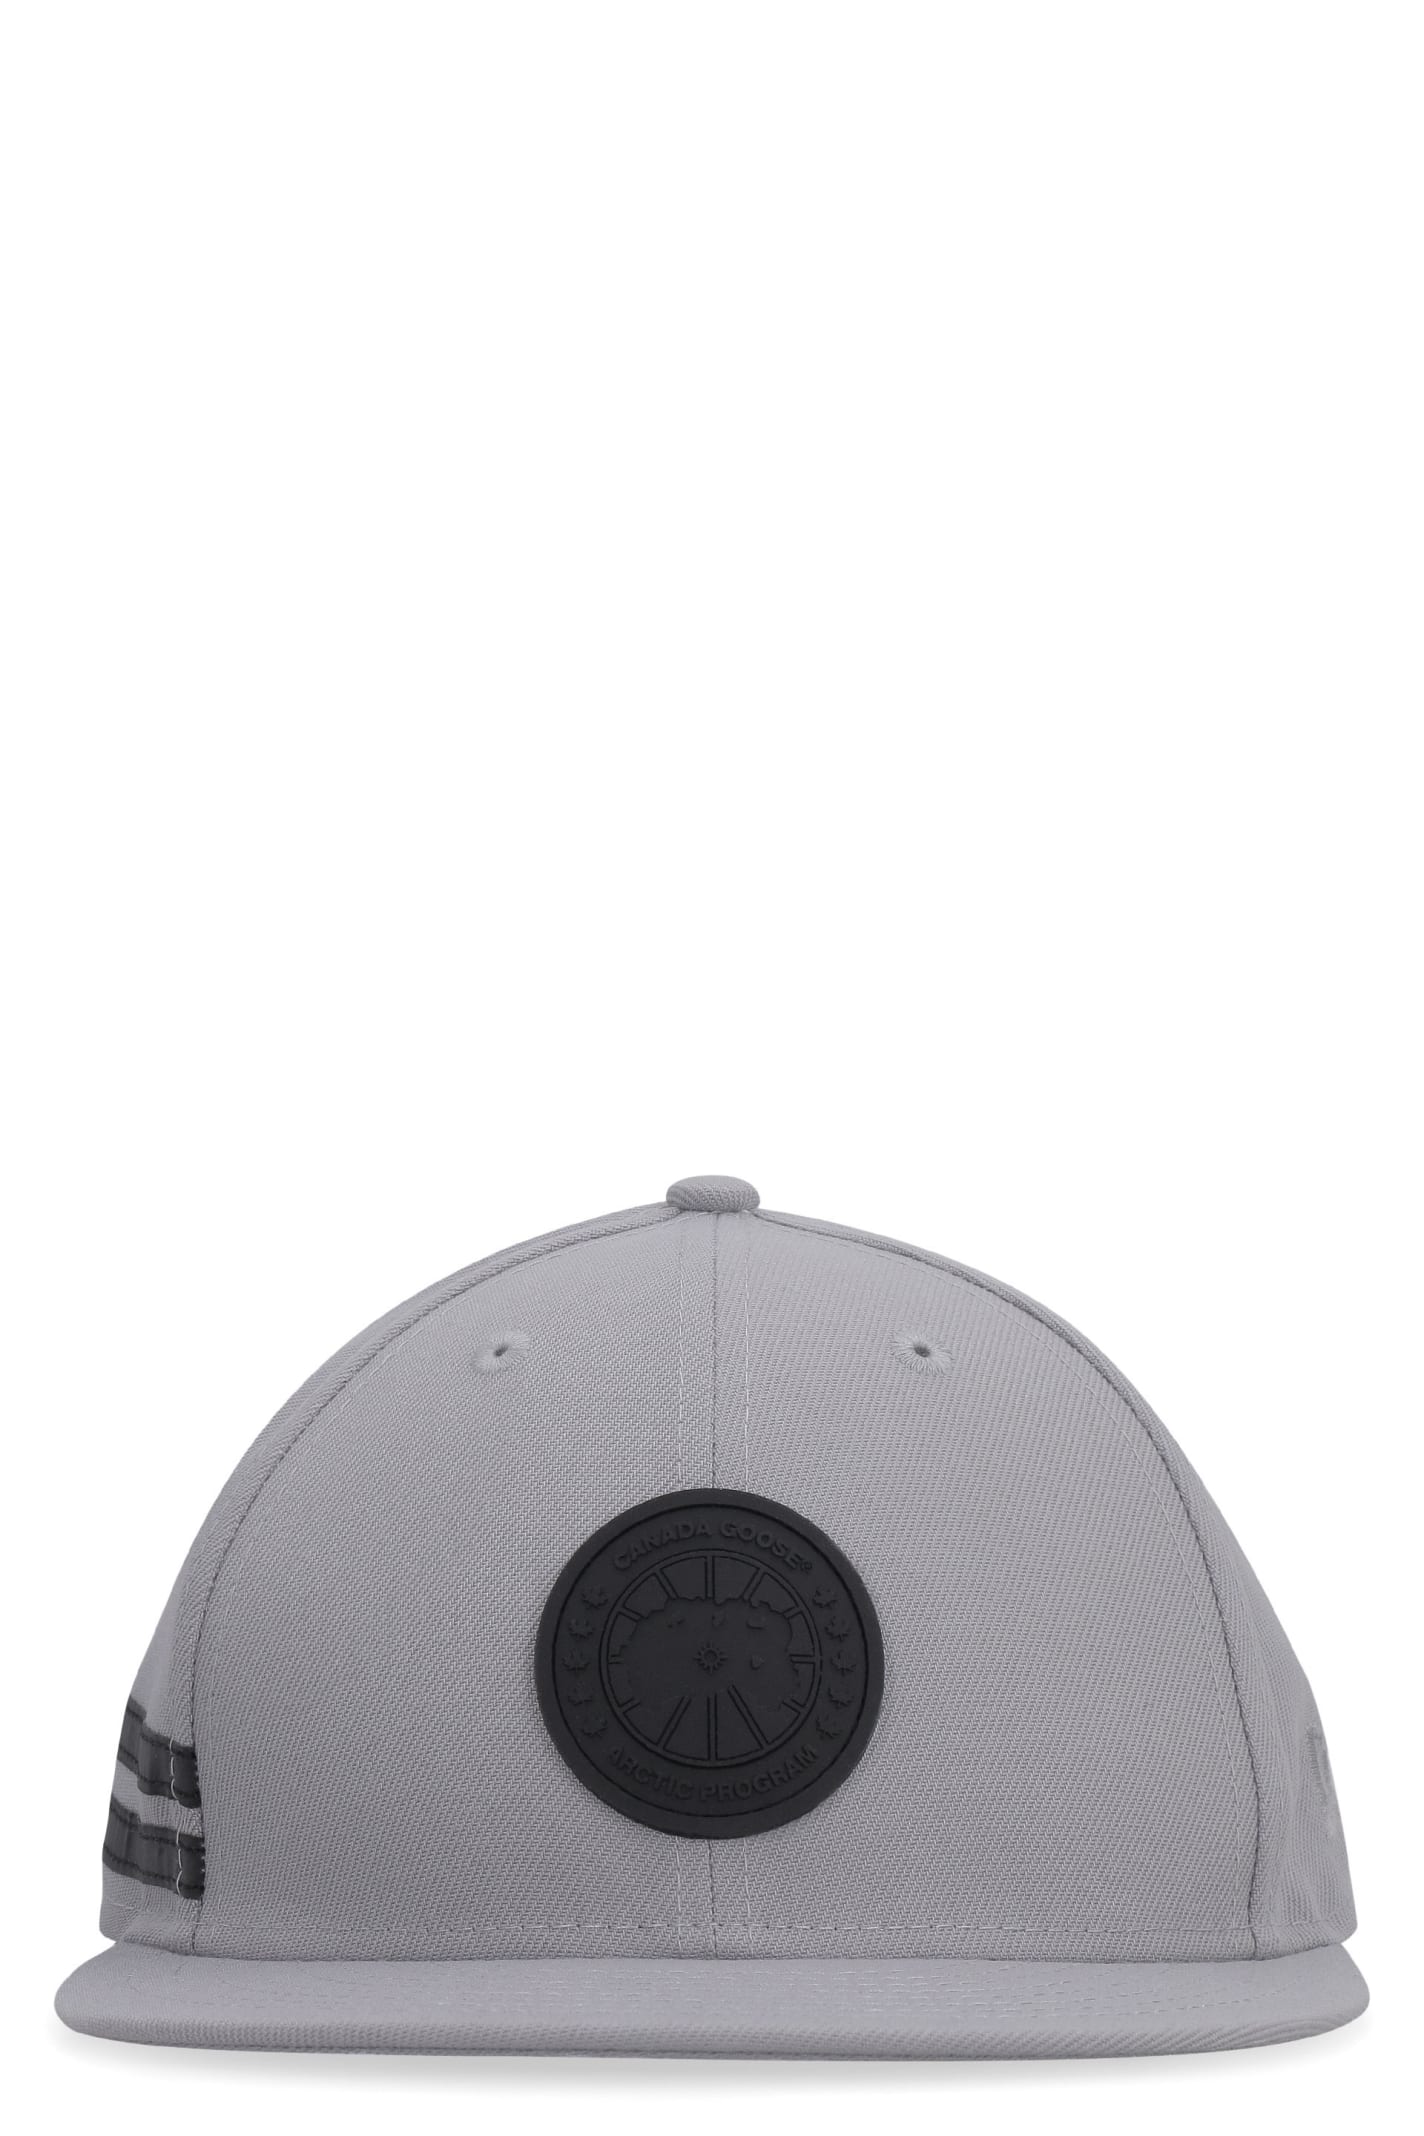 Canada Goose Arctic Disc Baseball Hat With Flat Visor